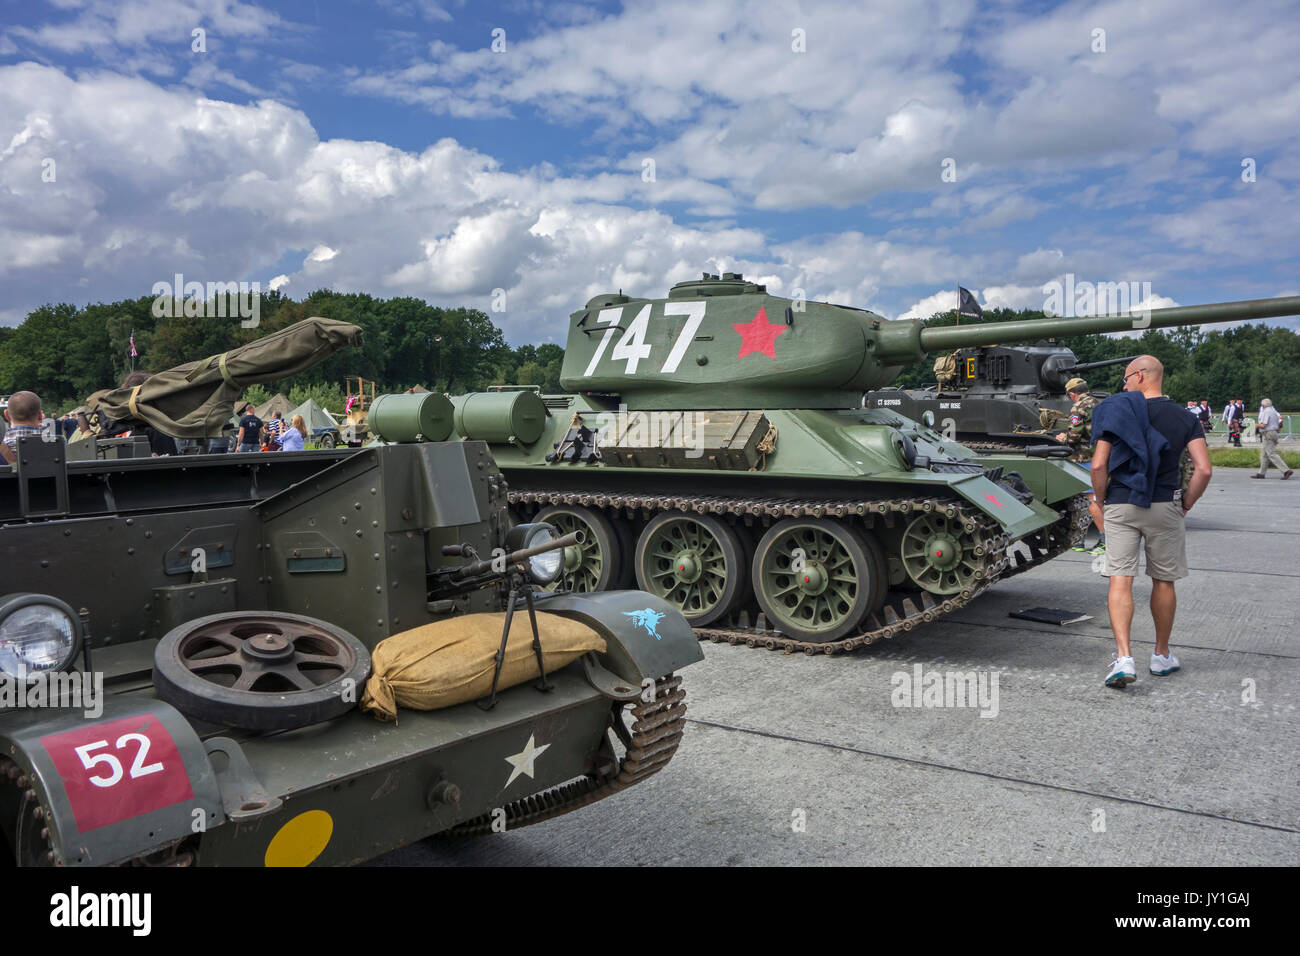 Visitors looking at World War Two tanks at WW2 military fair Stock Photo